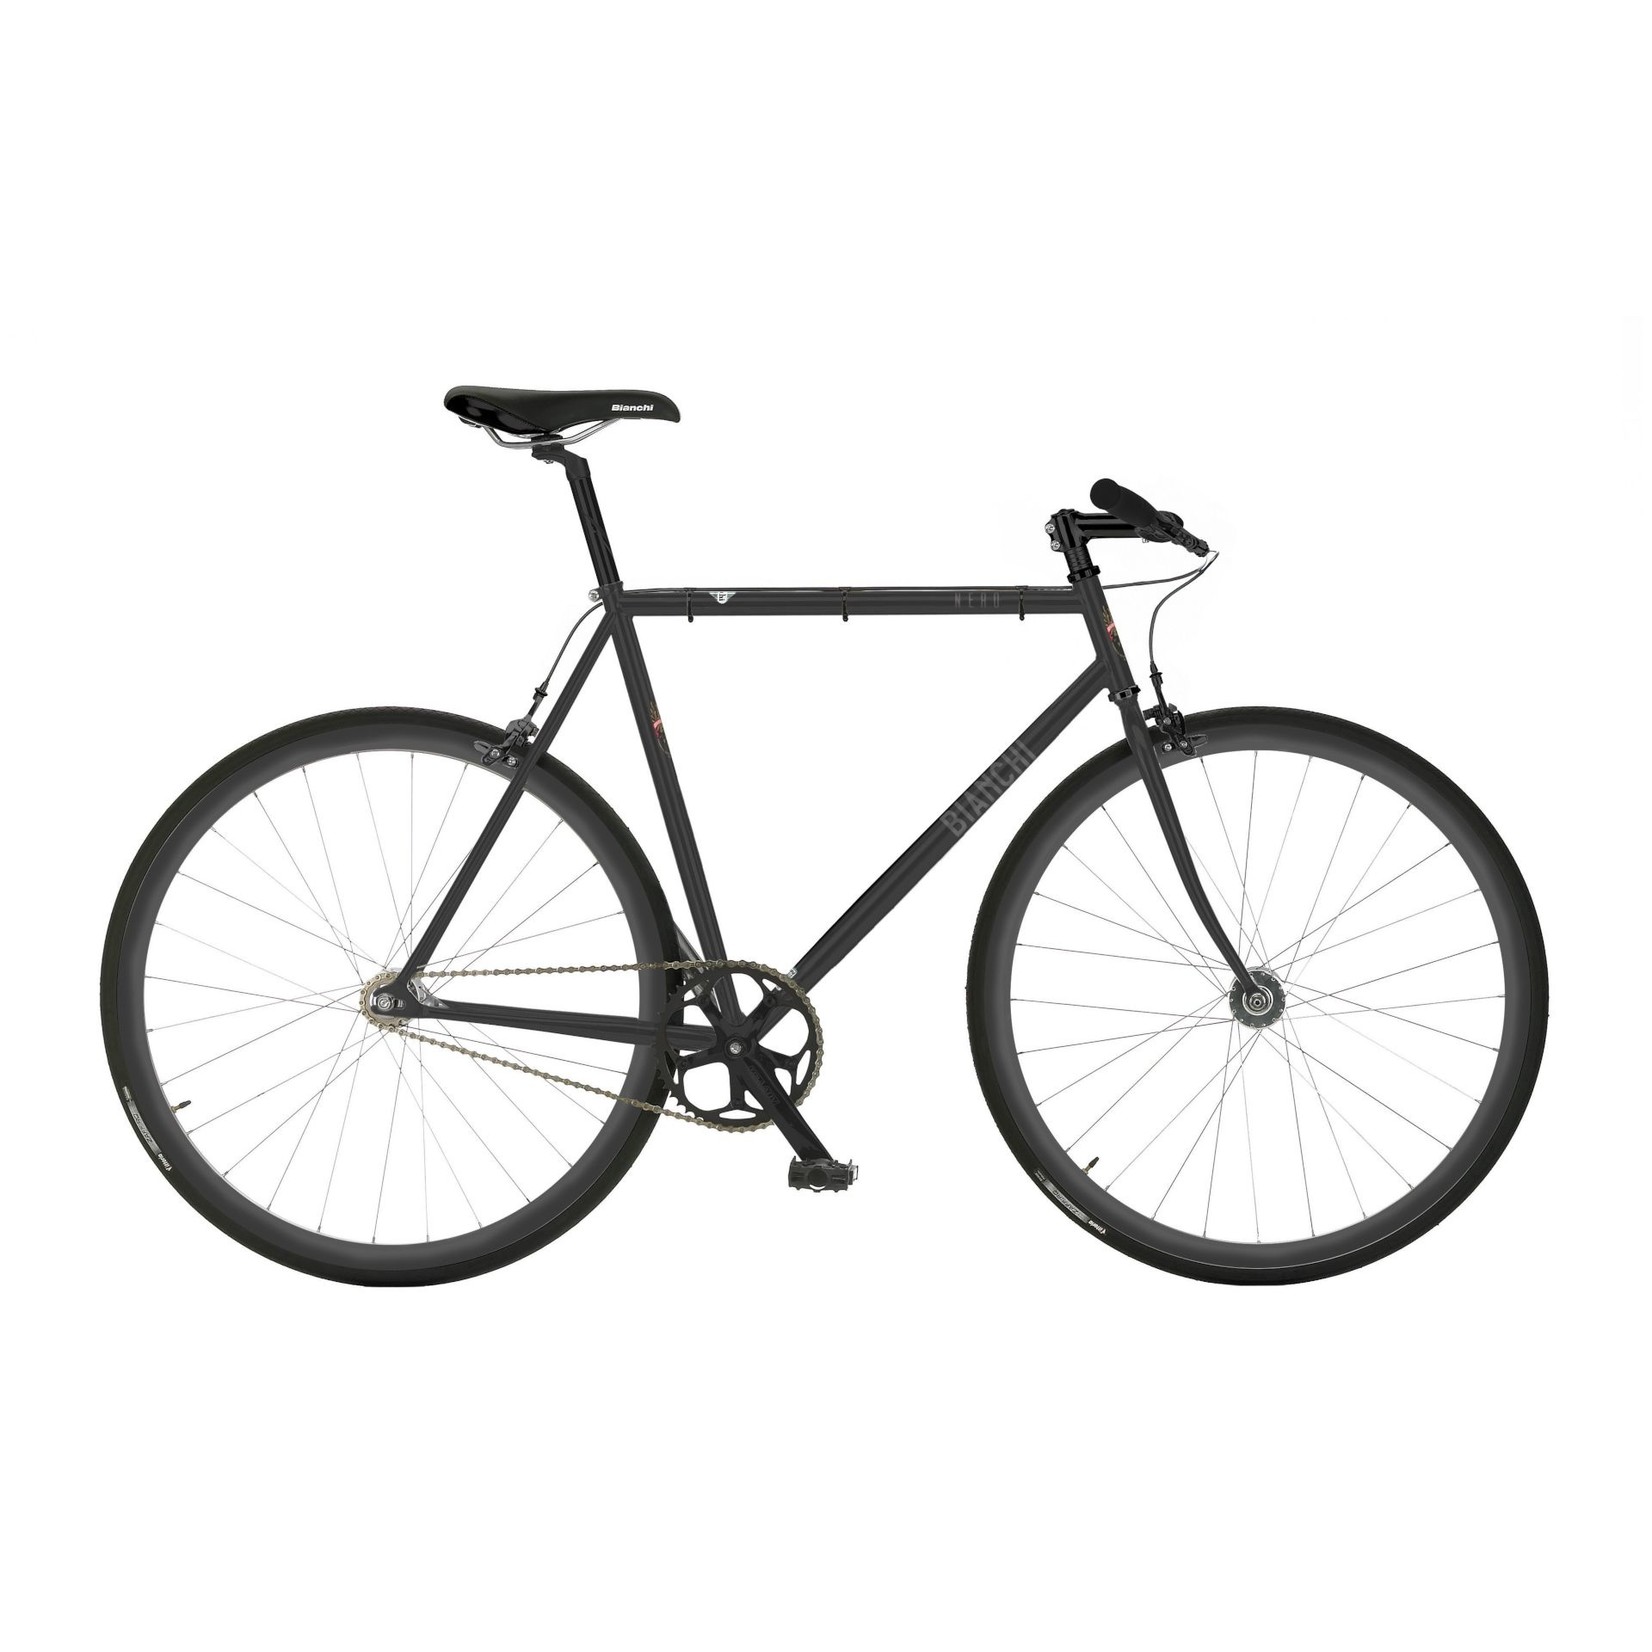 Bianchi - Nero SS - SoCal Bike